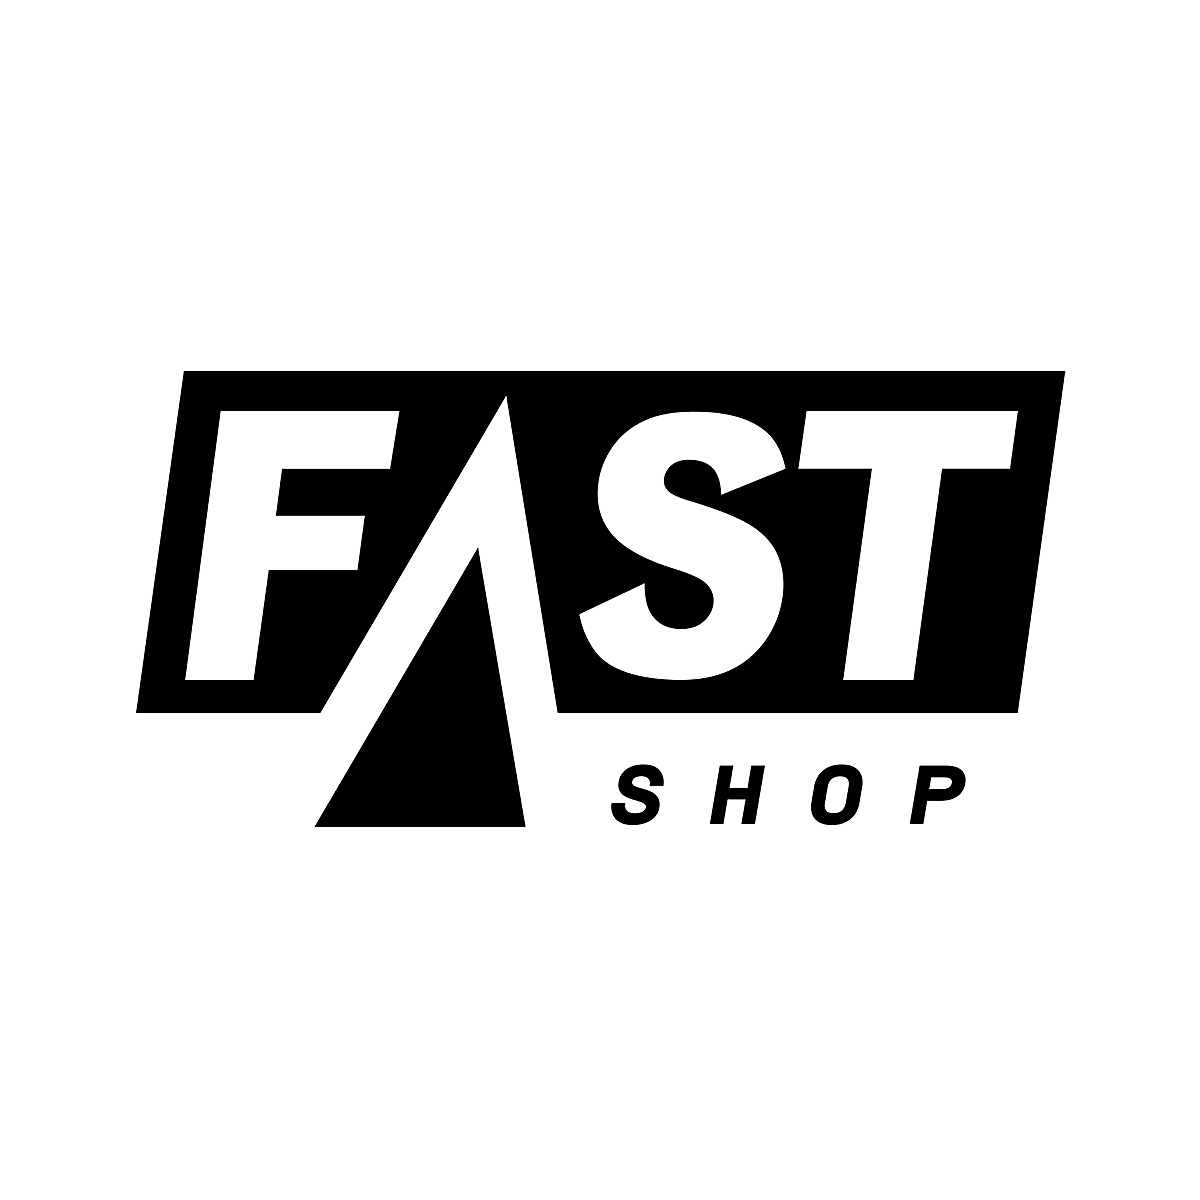  Fast Shop